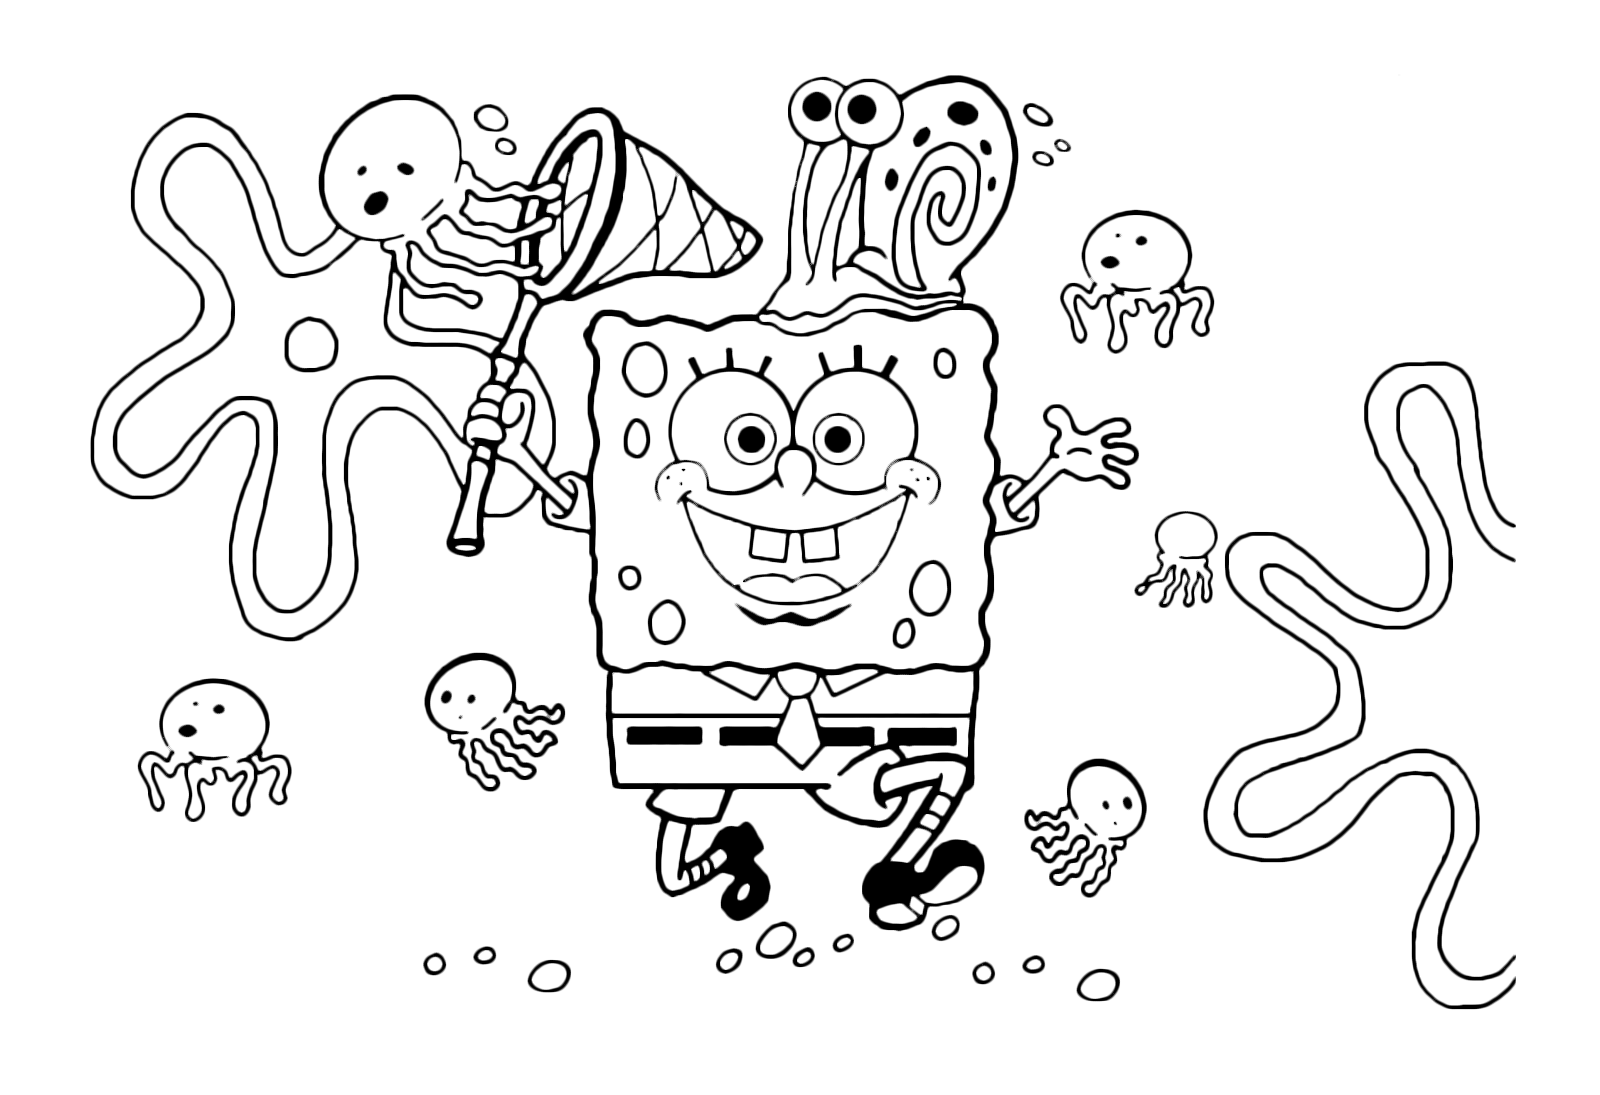 SpongeBob - SpongeBob walks in the middle of jellyfish with a net